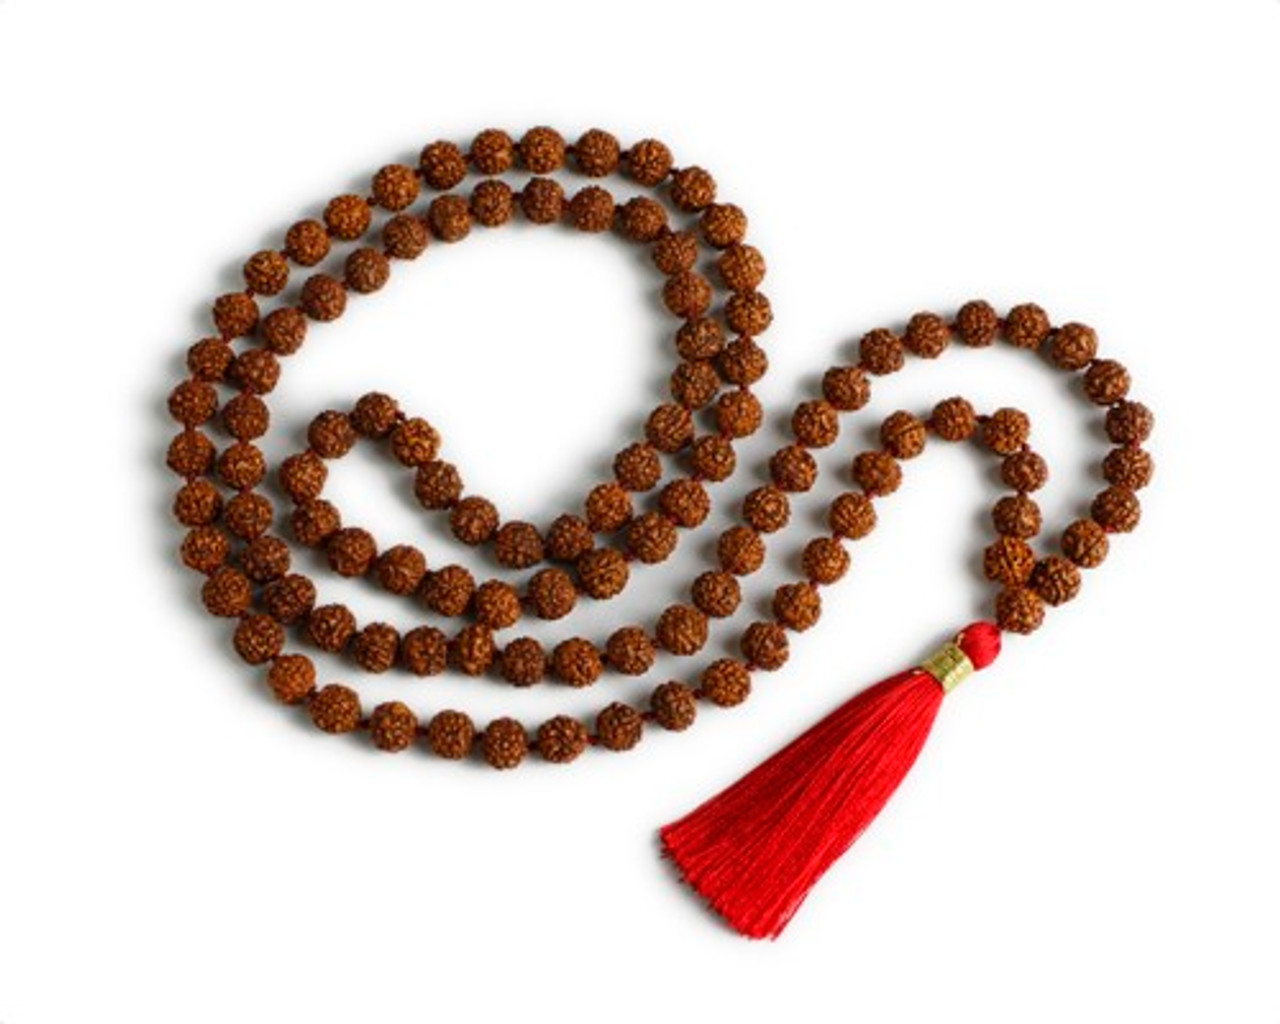 Mala Prayer Bead Design Options